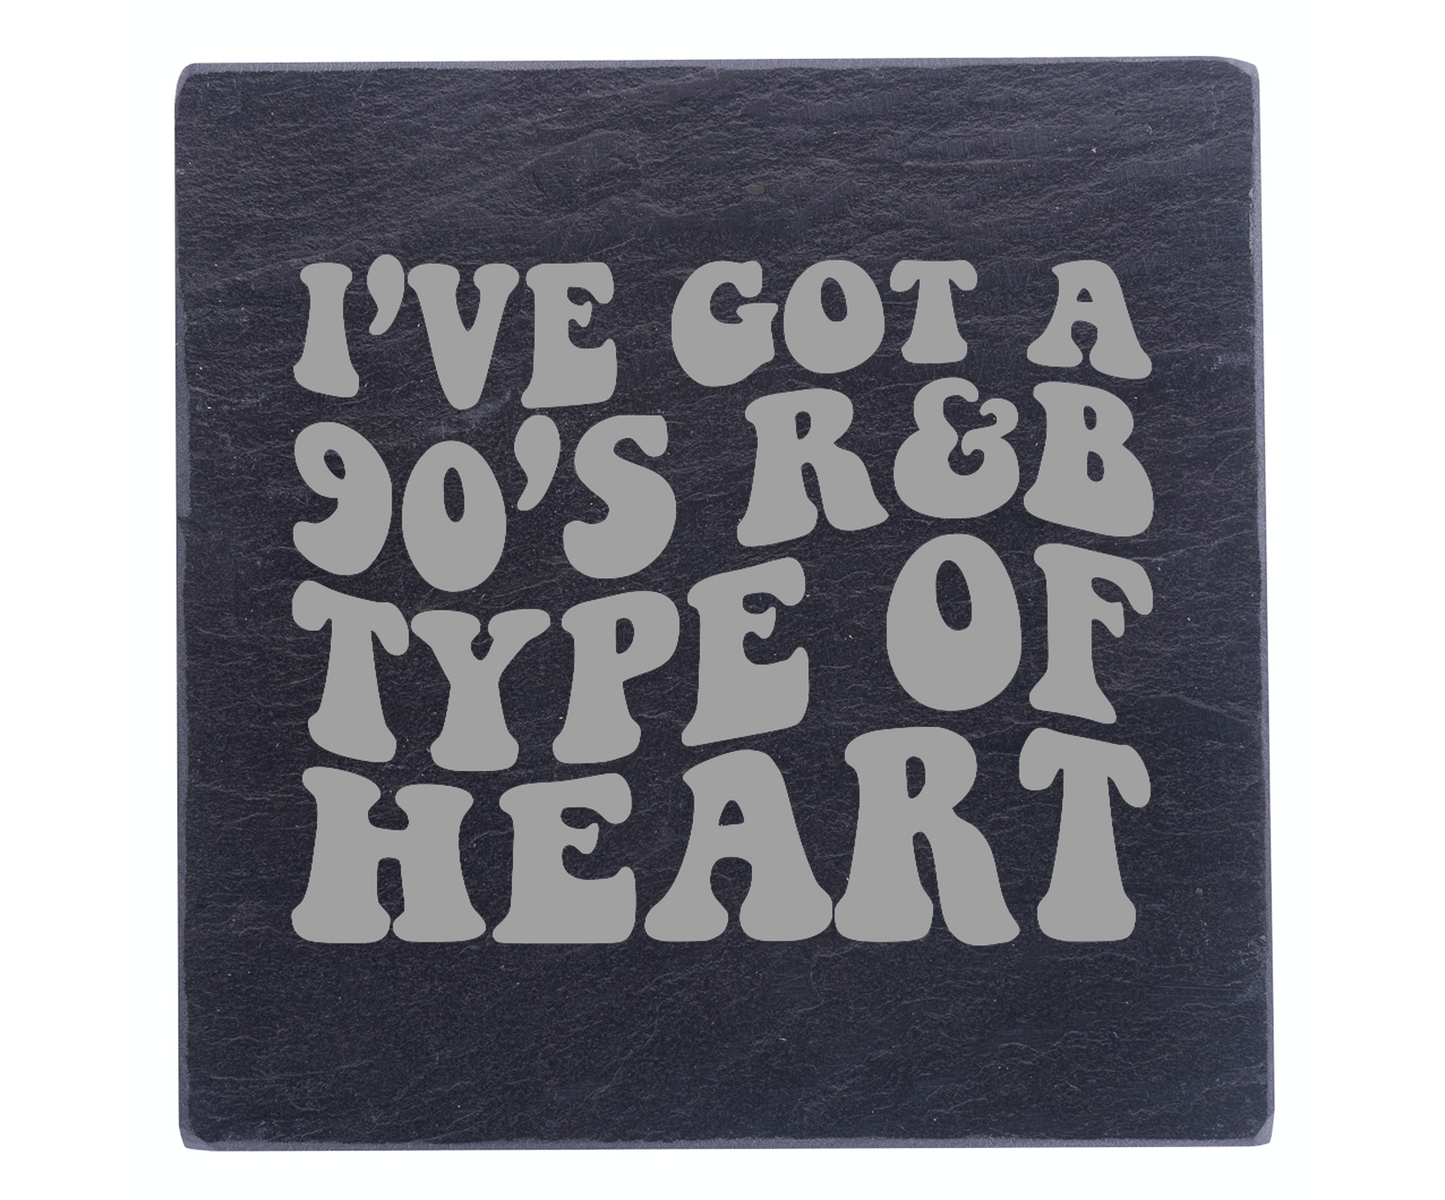 90's RnB Type Of Heart